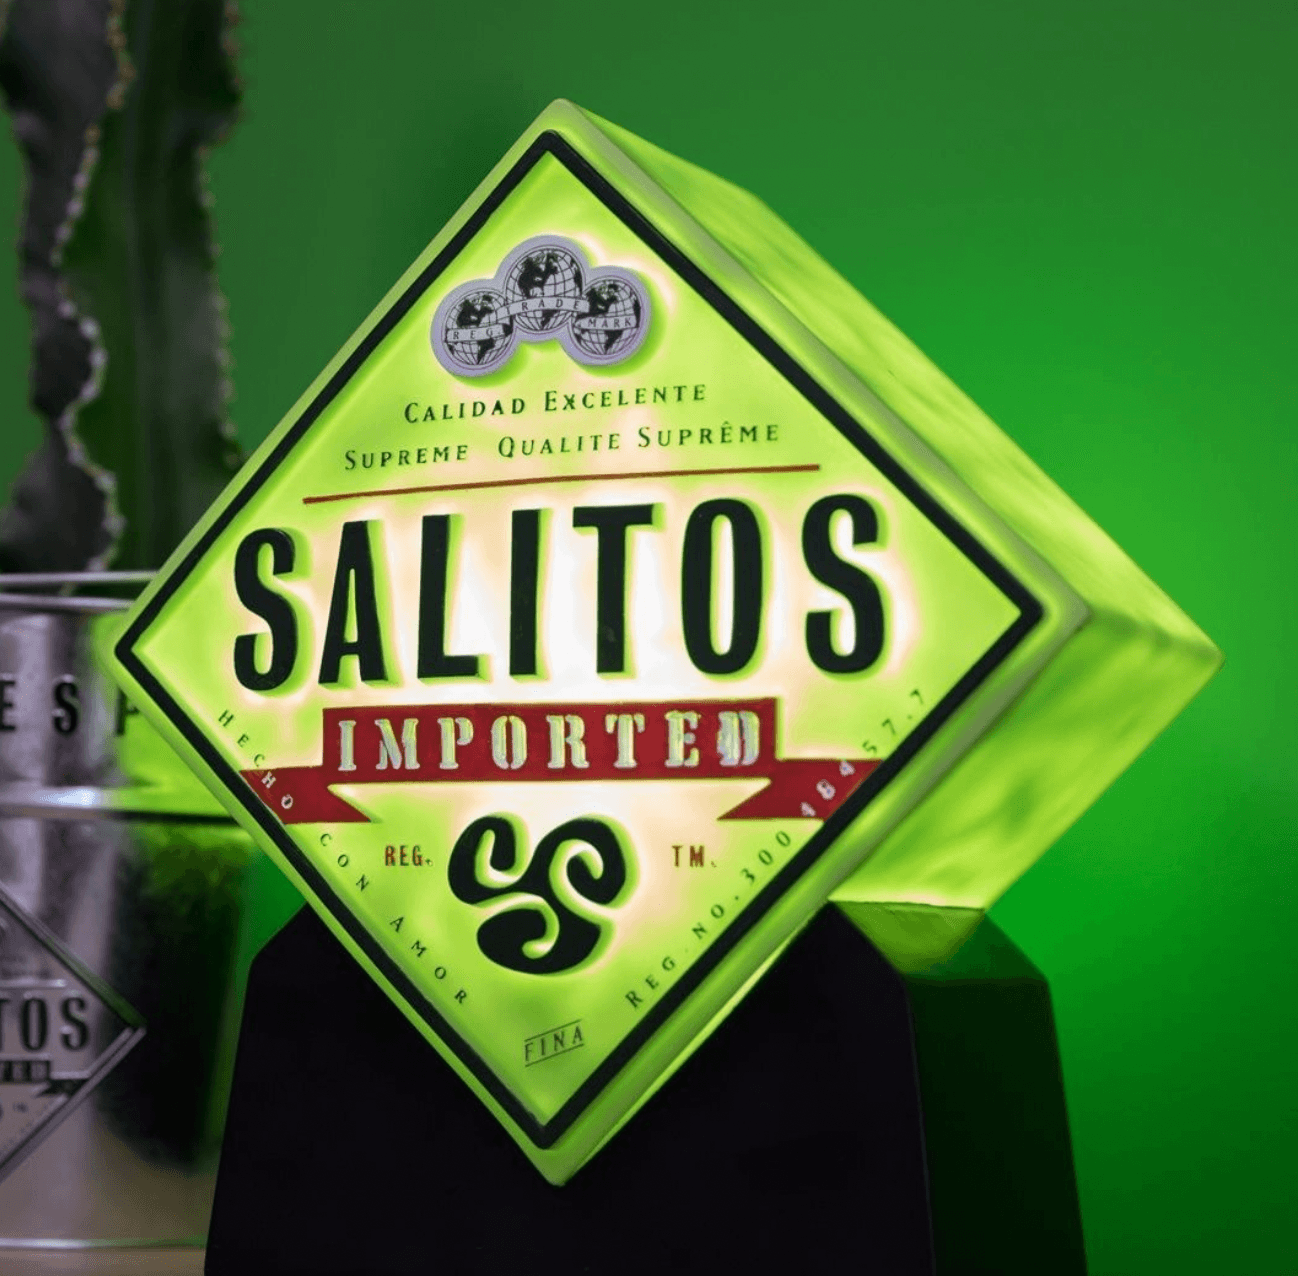 SALITOS lightened sign  - fresh id